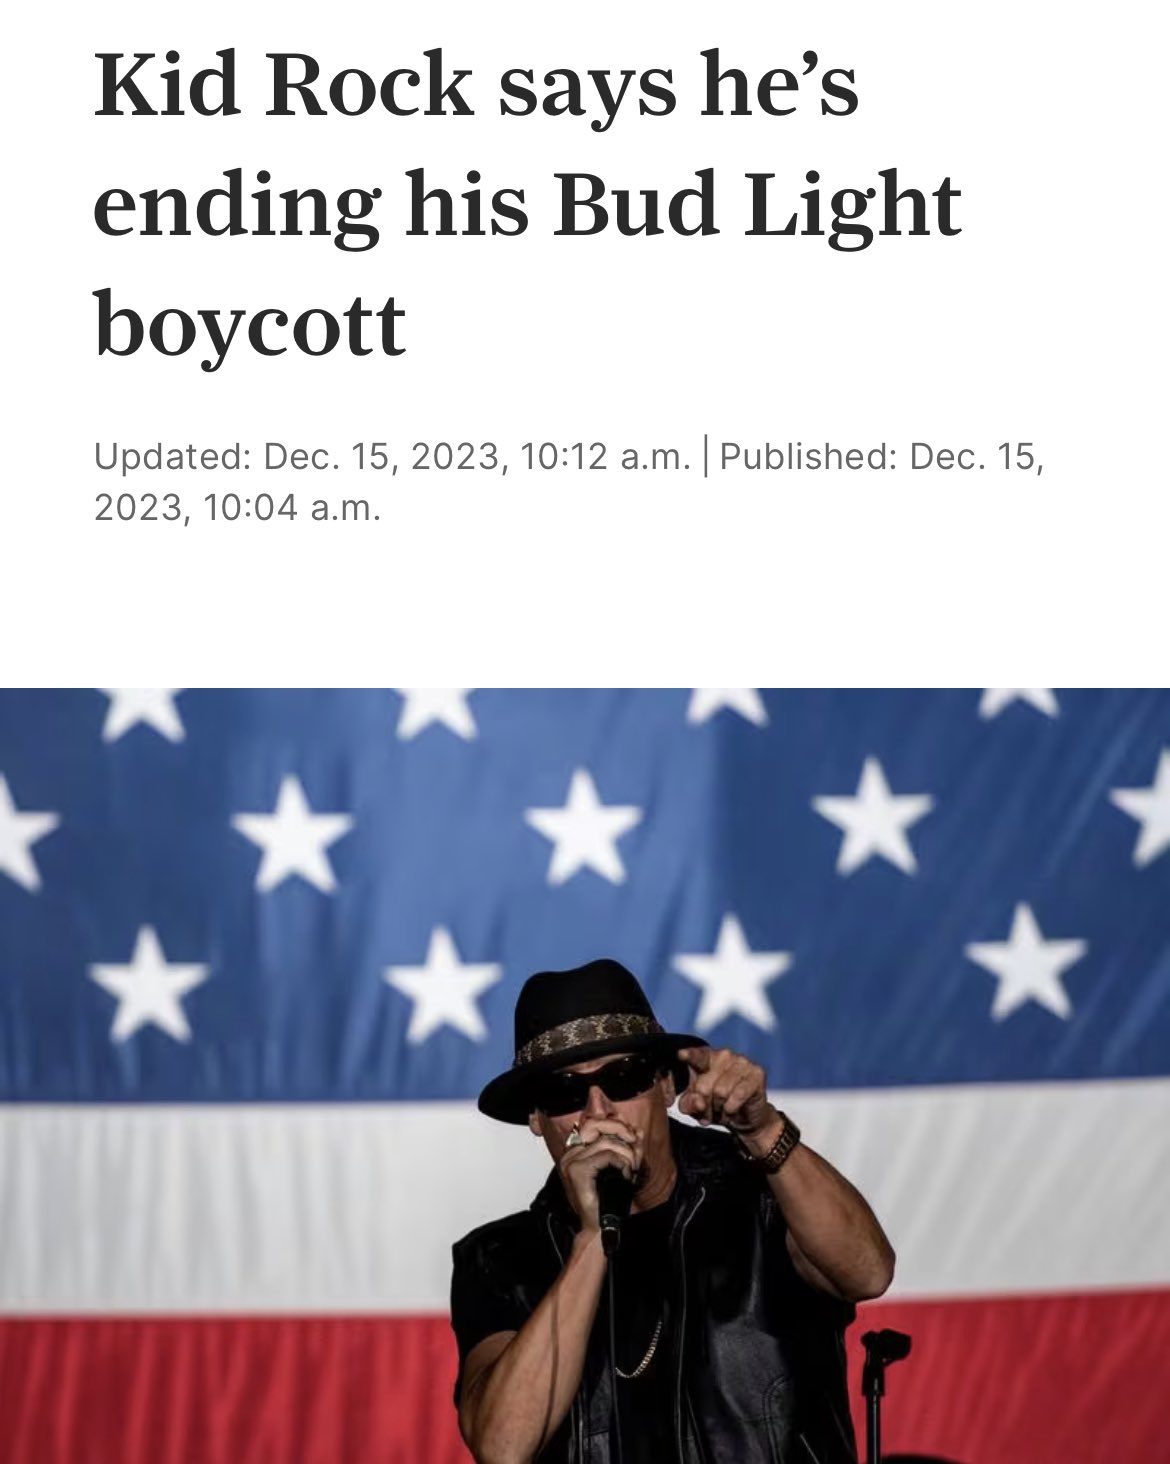 Kid Rock says he's ending his Bud Light boycott